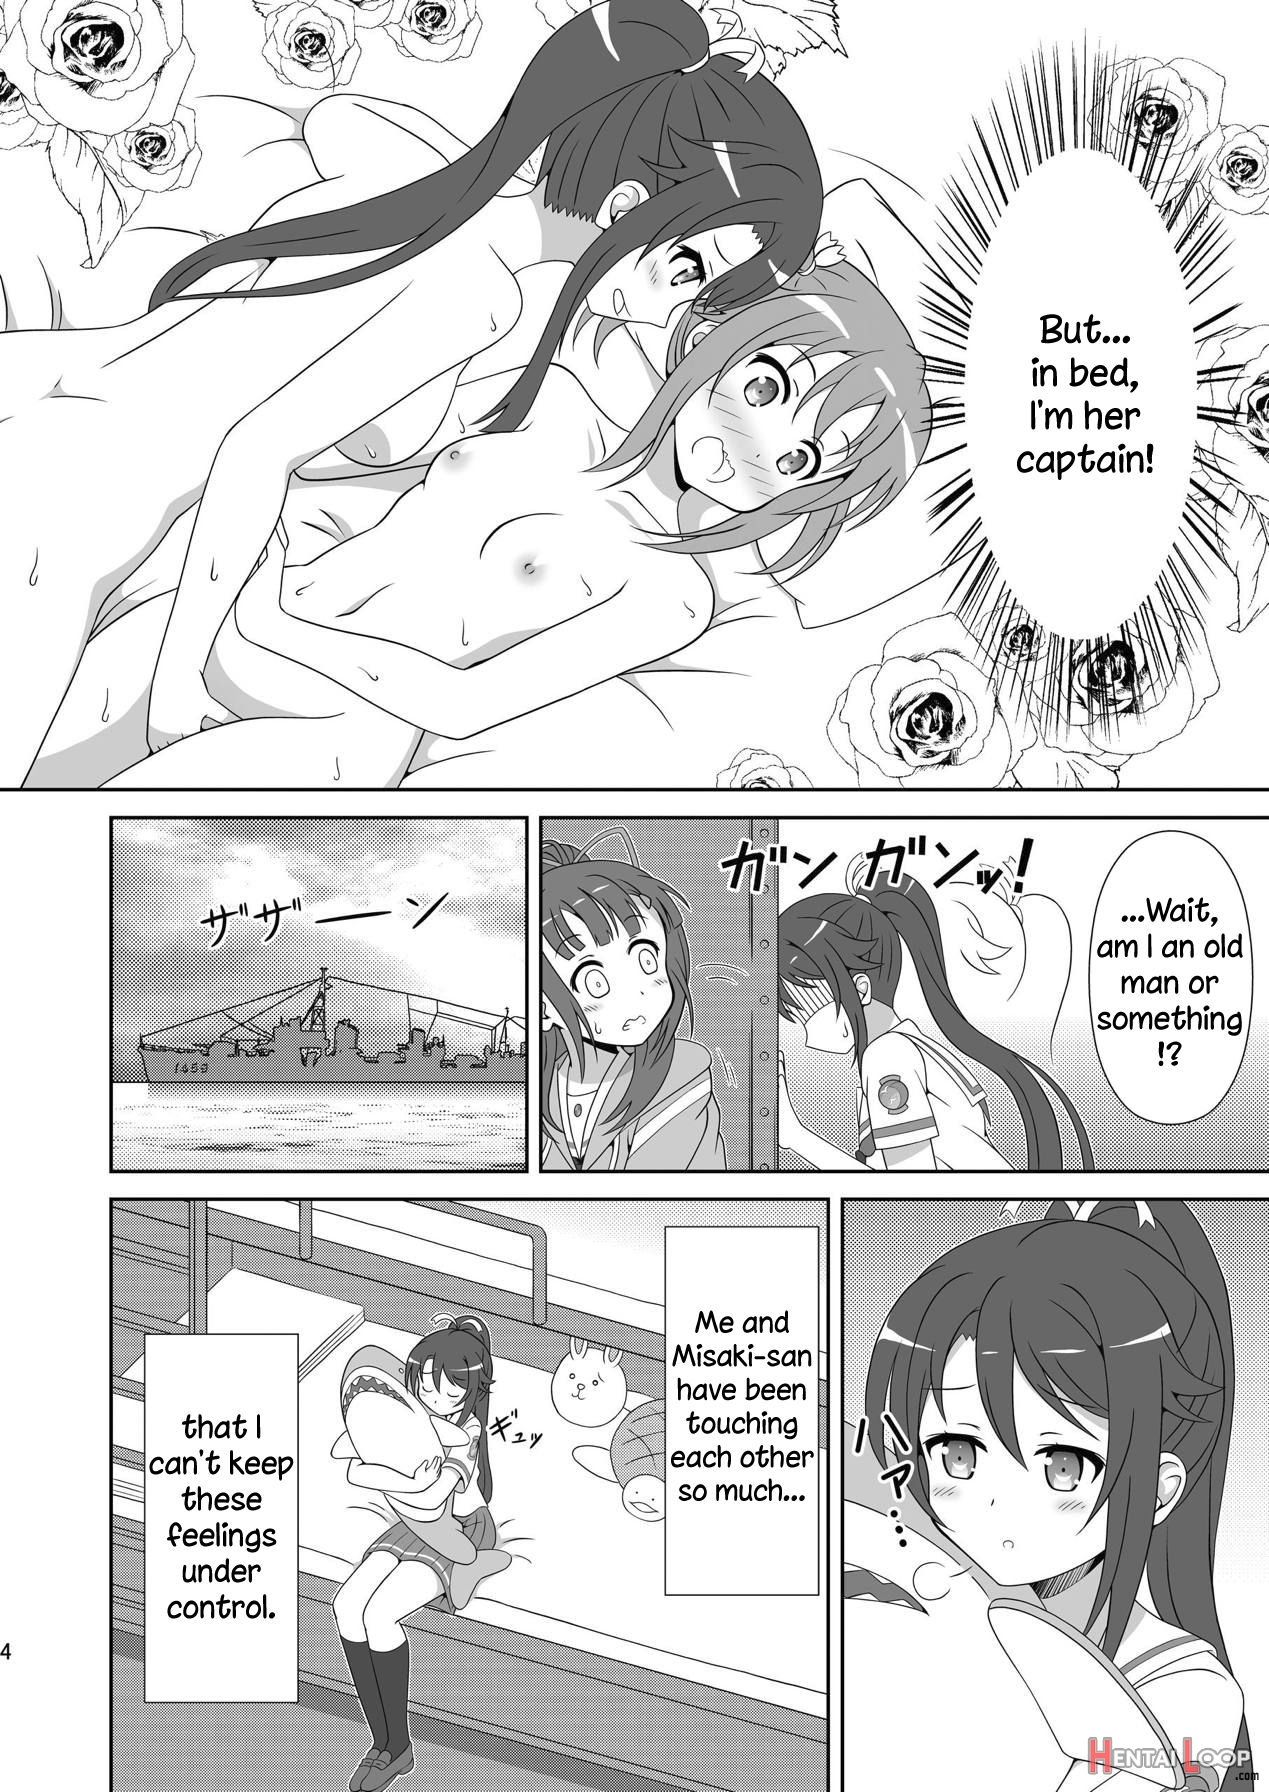 Souya X Misaki 2 page 3